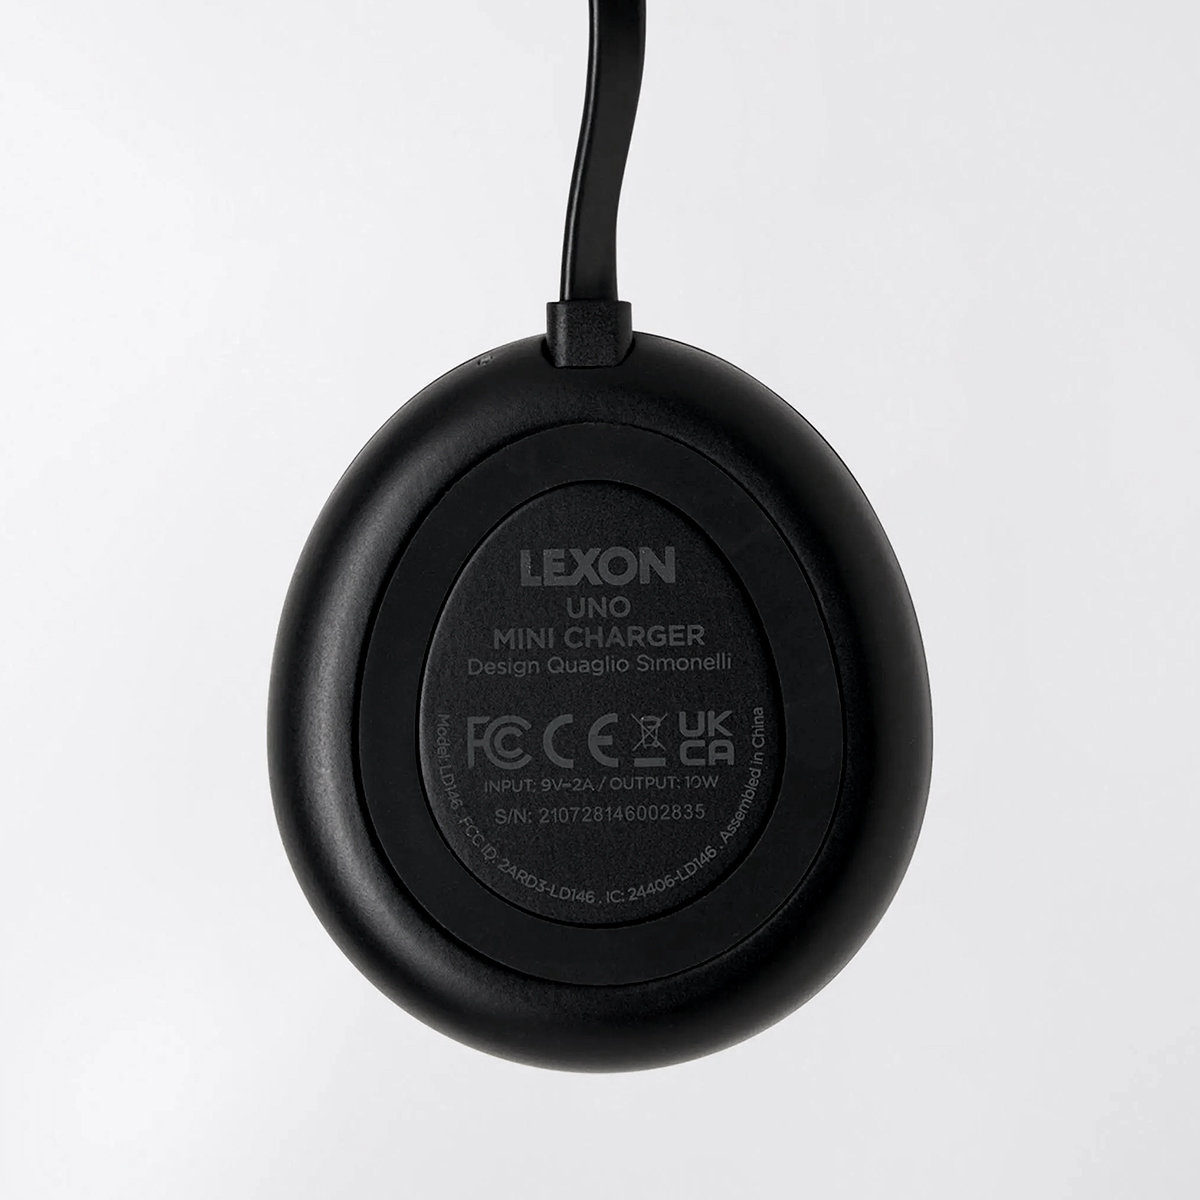 EDWIN x LEXON Uno Mini Charger Wireless